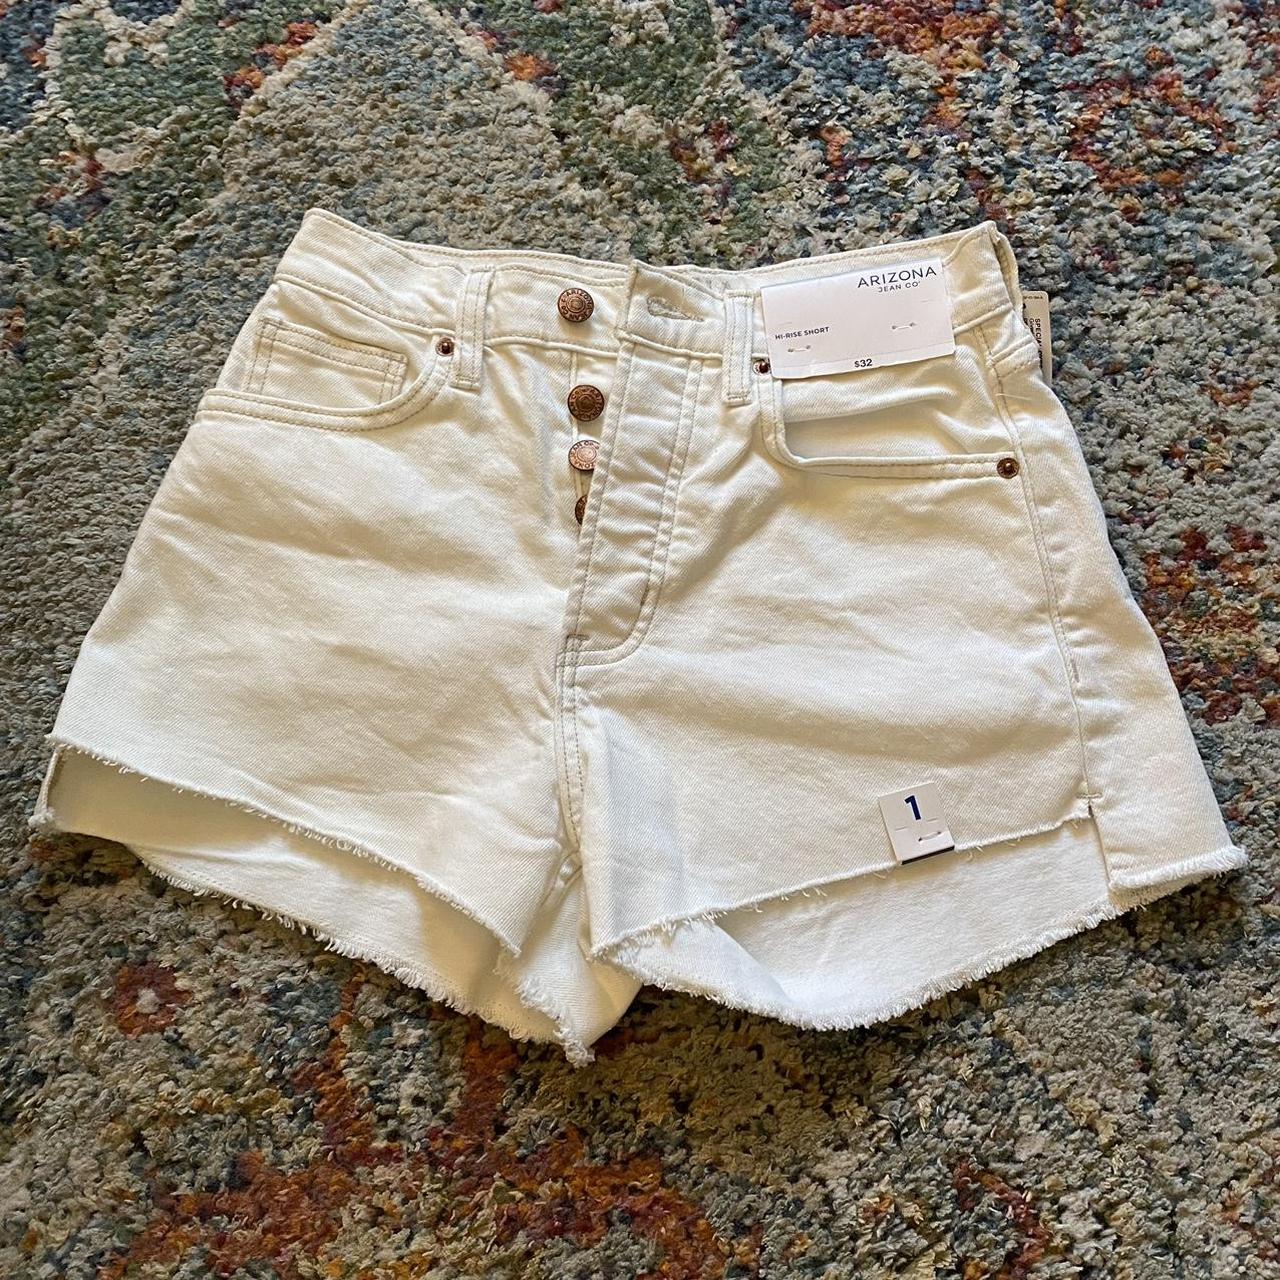 BNWT white Arizona cutoff jean shorts with copper... - Depop